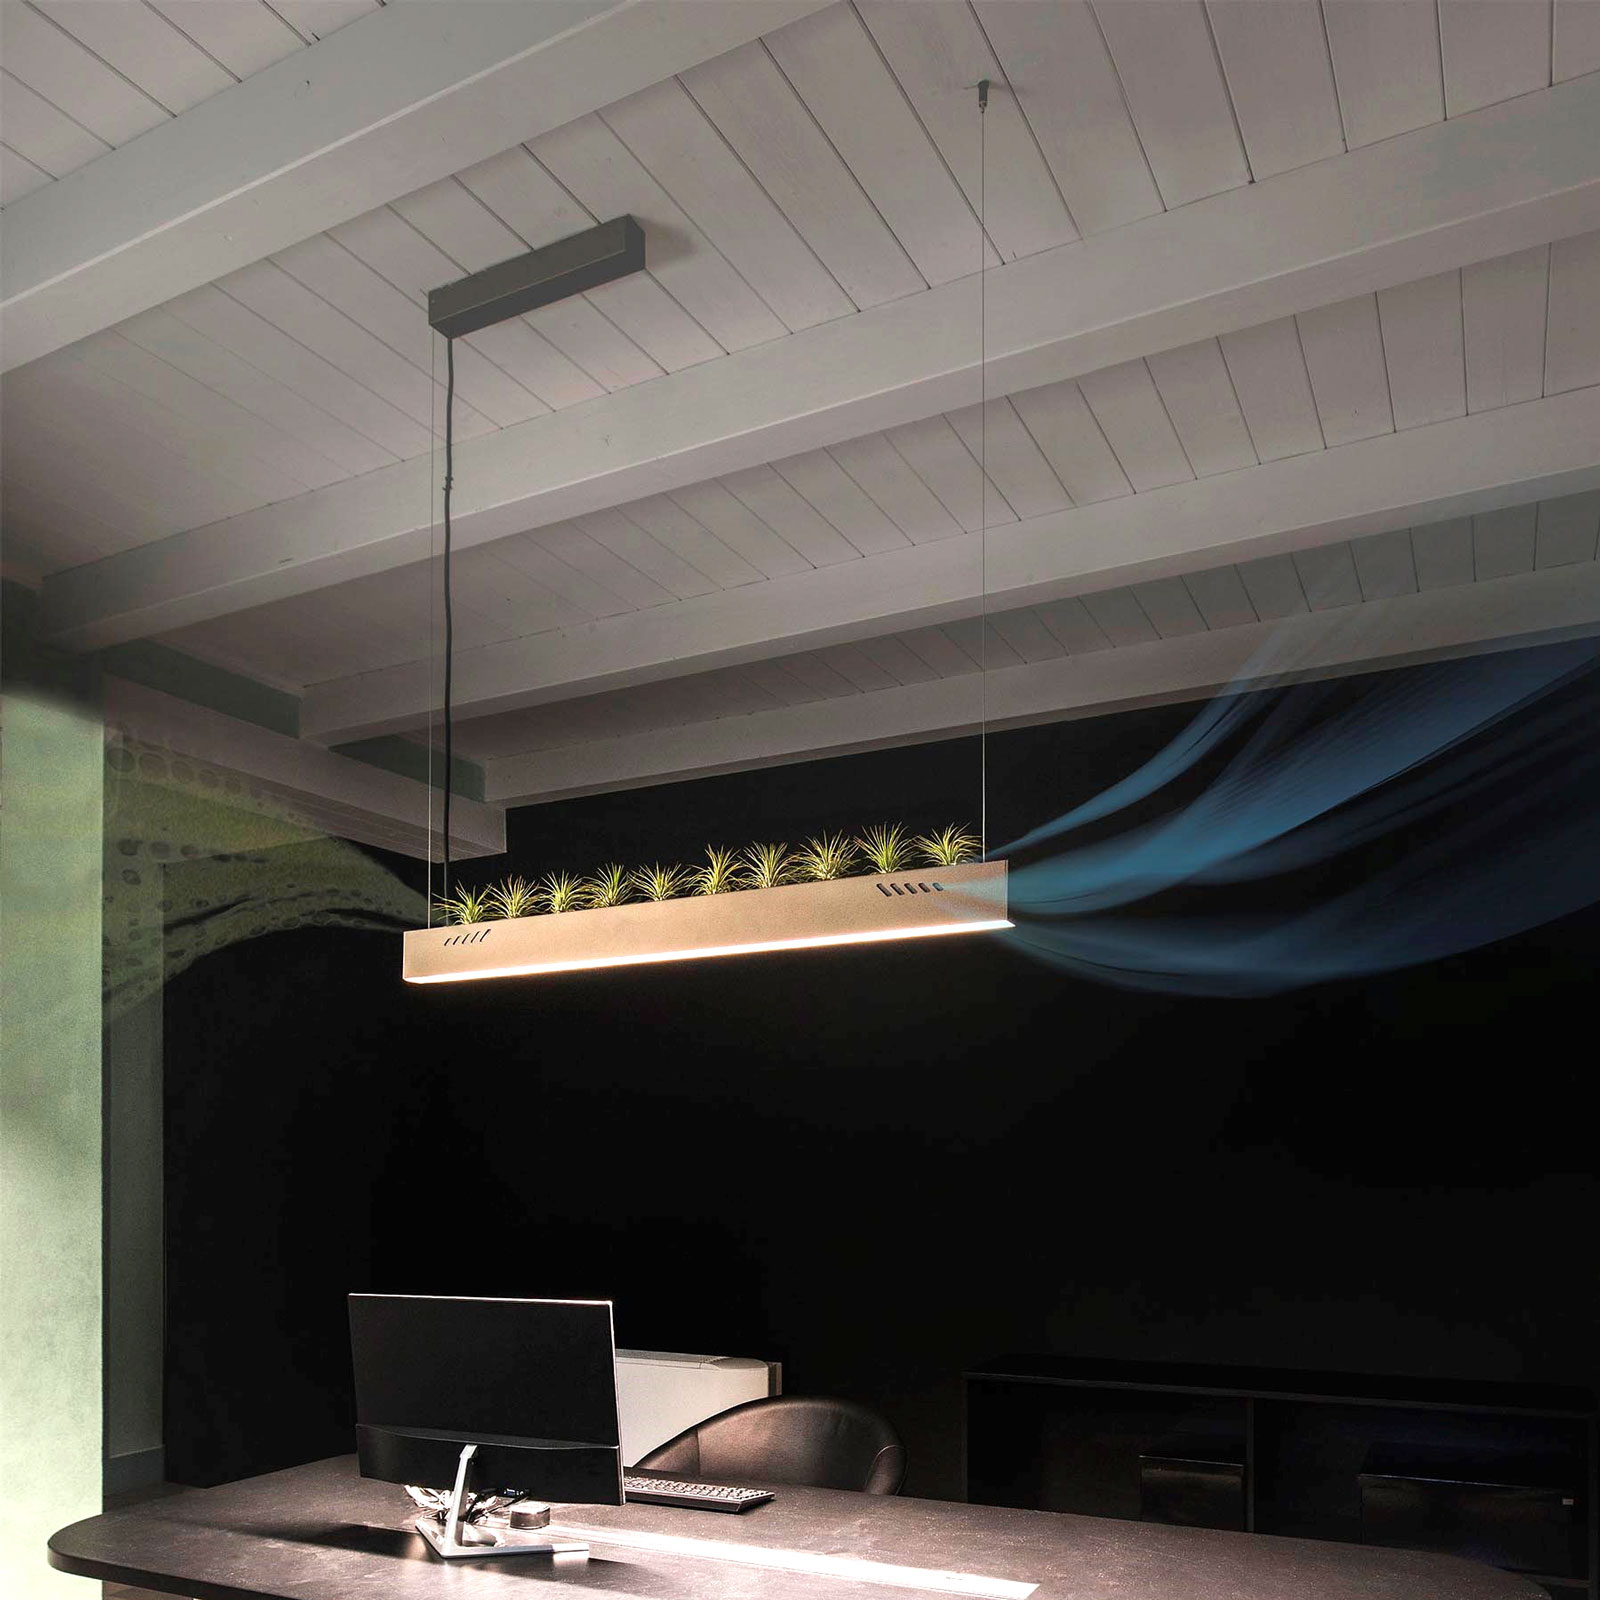 OLEV Green Kit for Pure BioAir LED hanging light